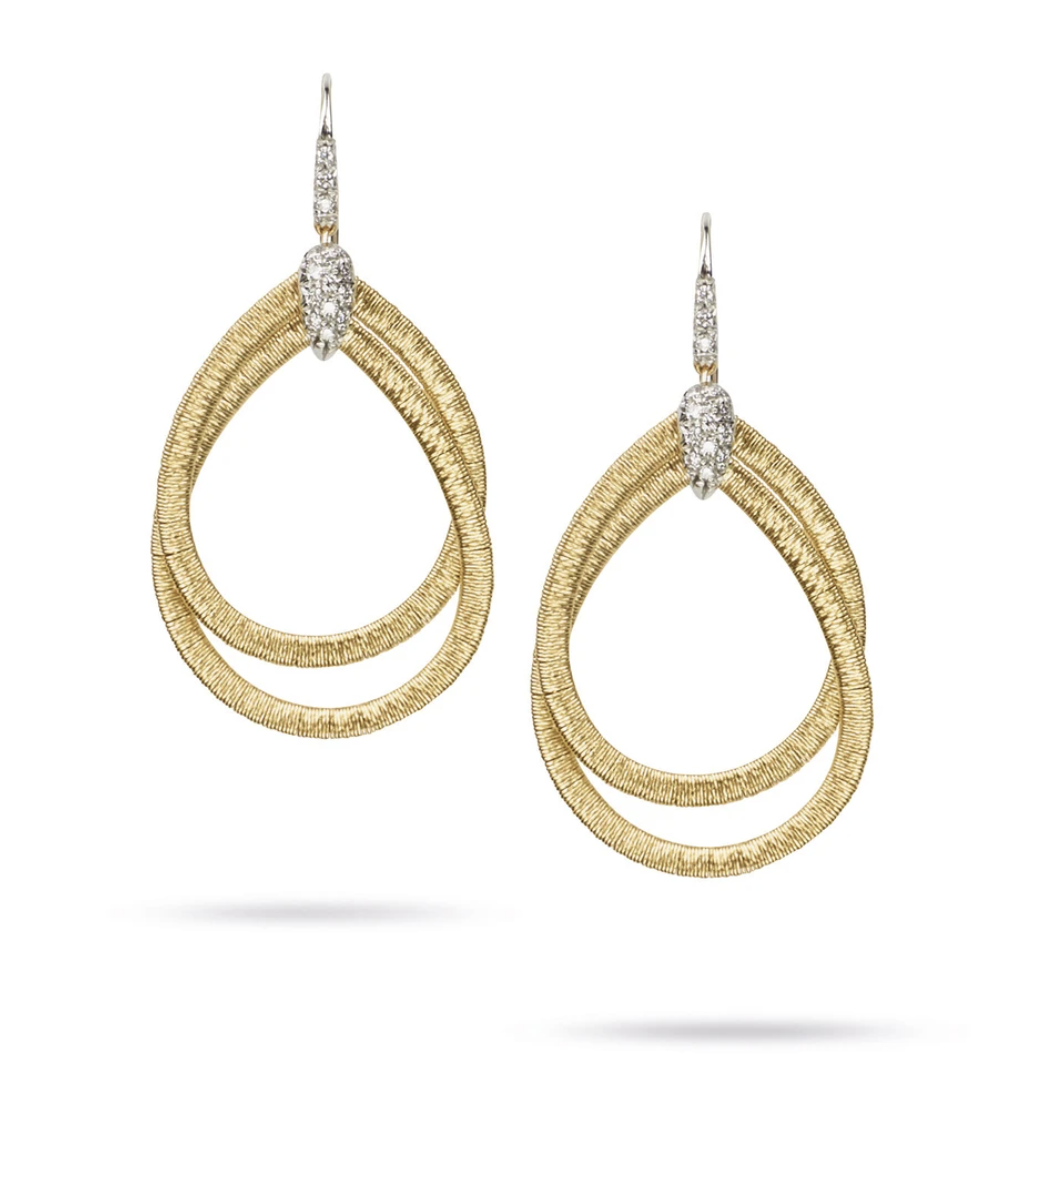 Cairo Collection 18K Yellow Gold & Diamond Earrings